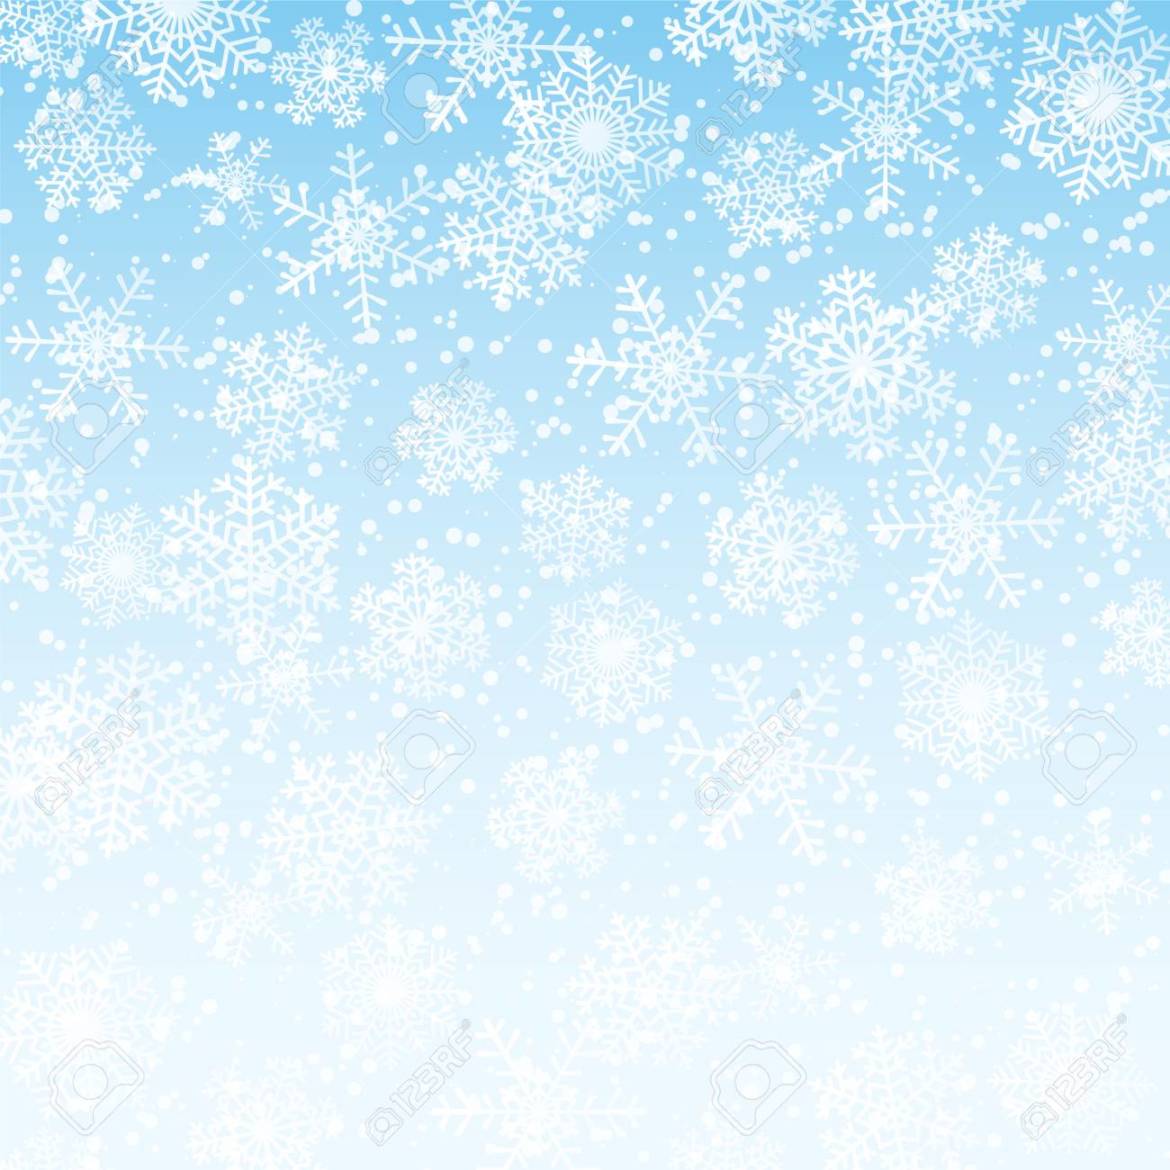 23645527-hiver-ciel-bleu-avec-des-flocons-de-neige-tombés.jpg